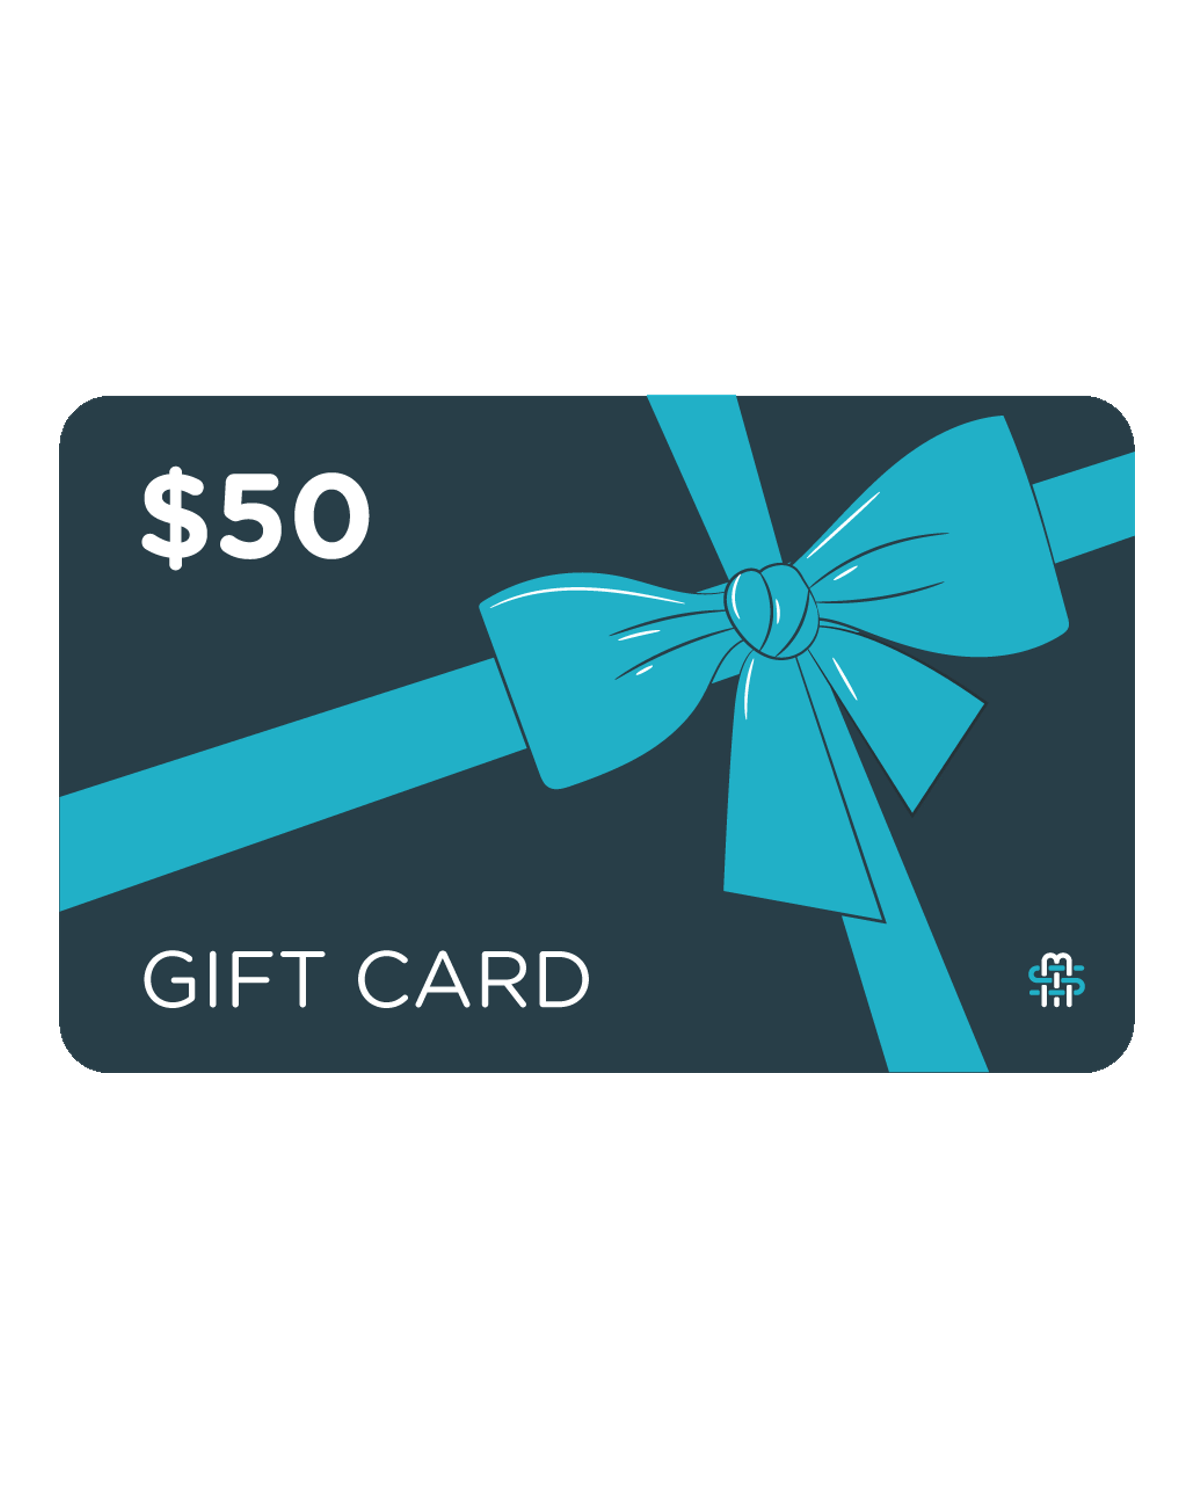 Gift card - E-Gift card